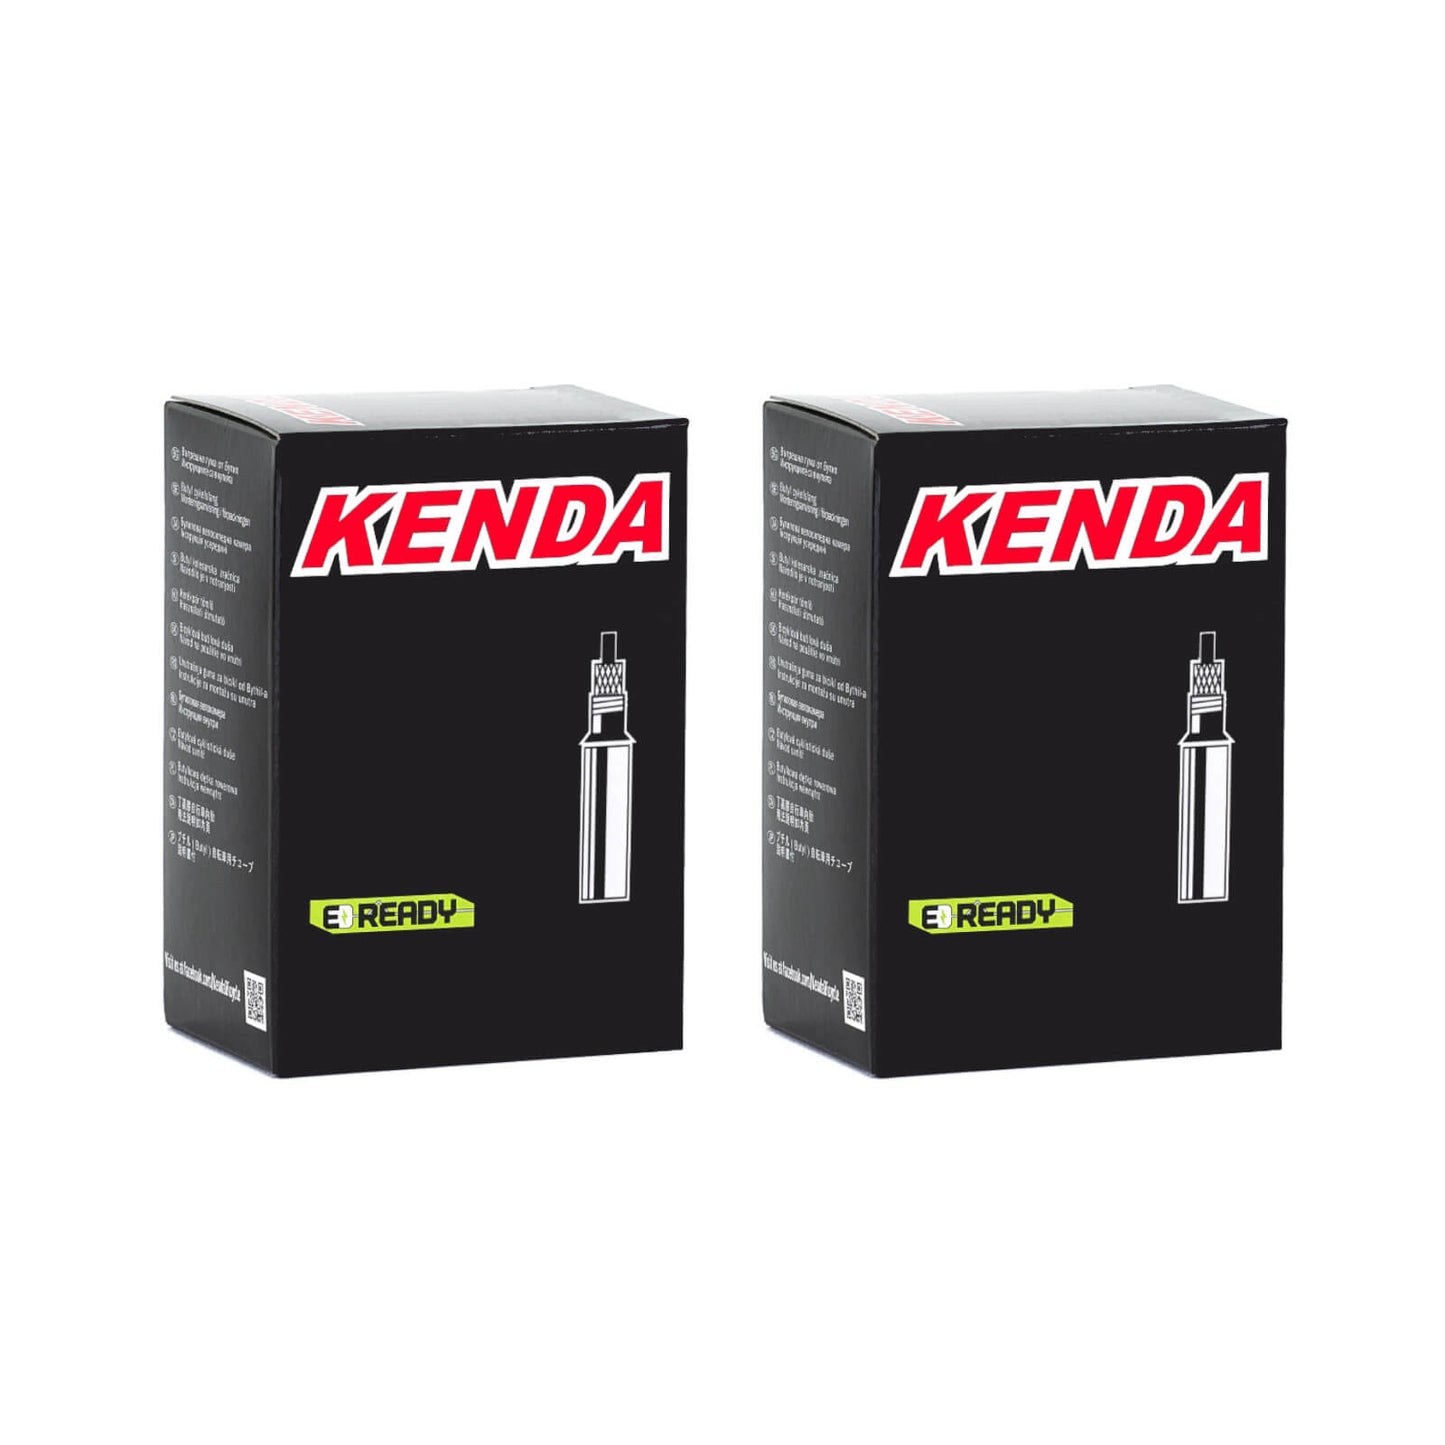 Kenda 26x2.75-3.0" 26 Inch Presta Valve Bike Inner Tube Pack of 2